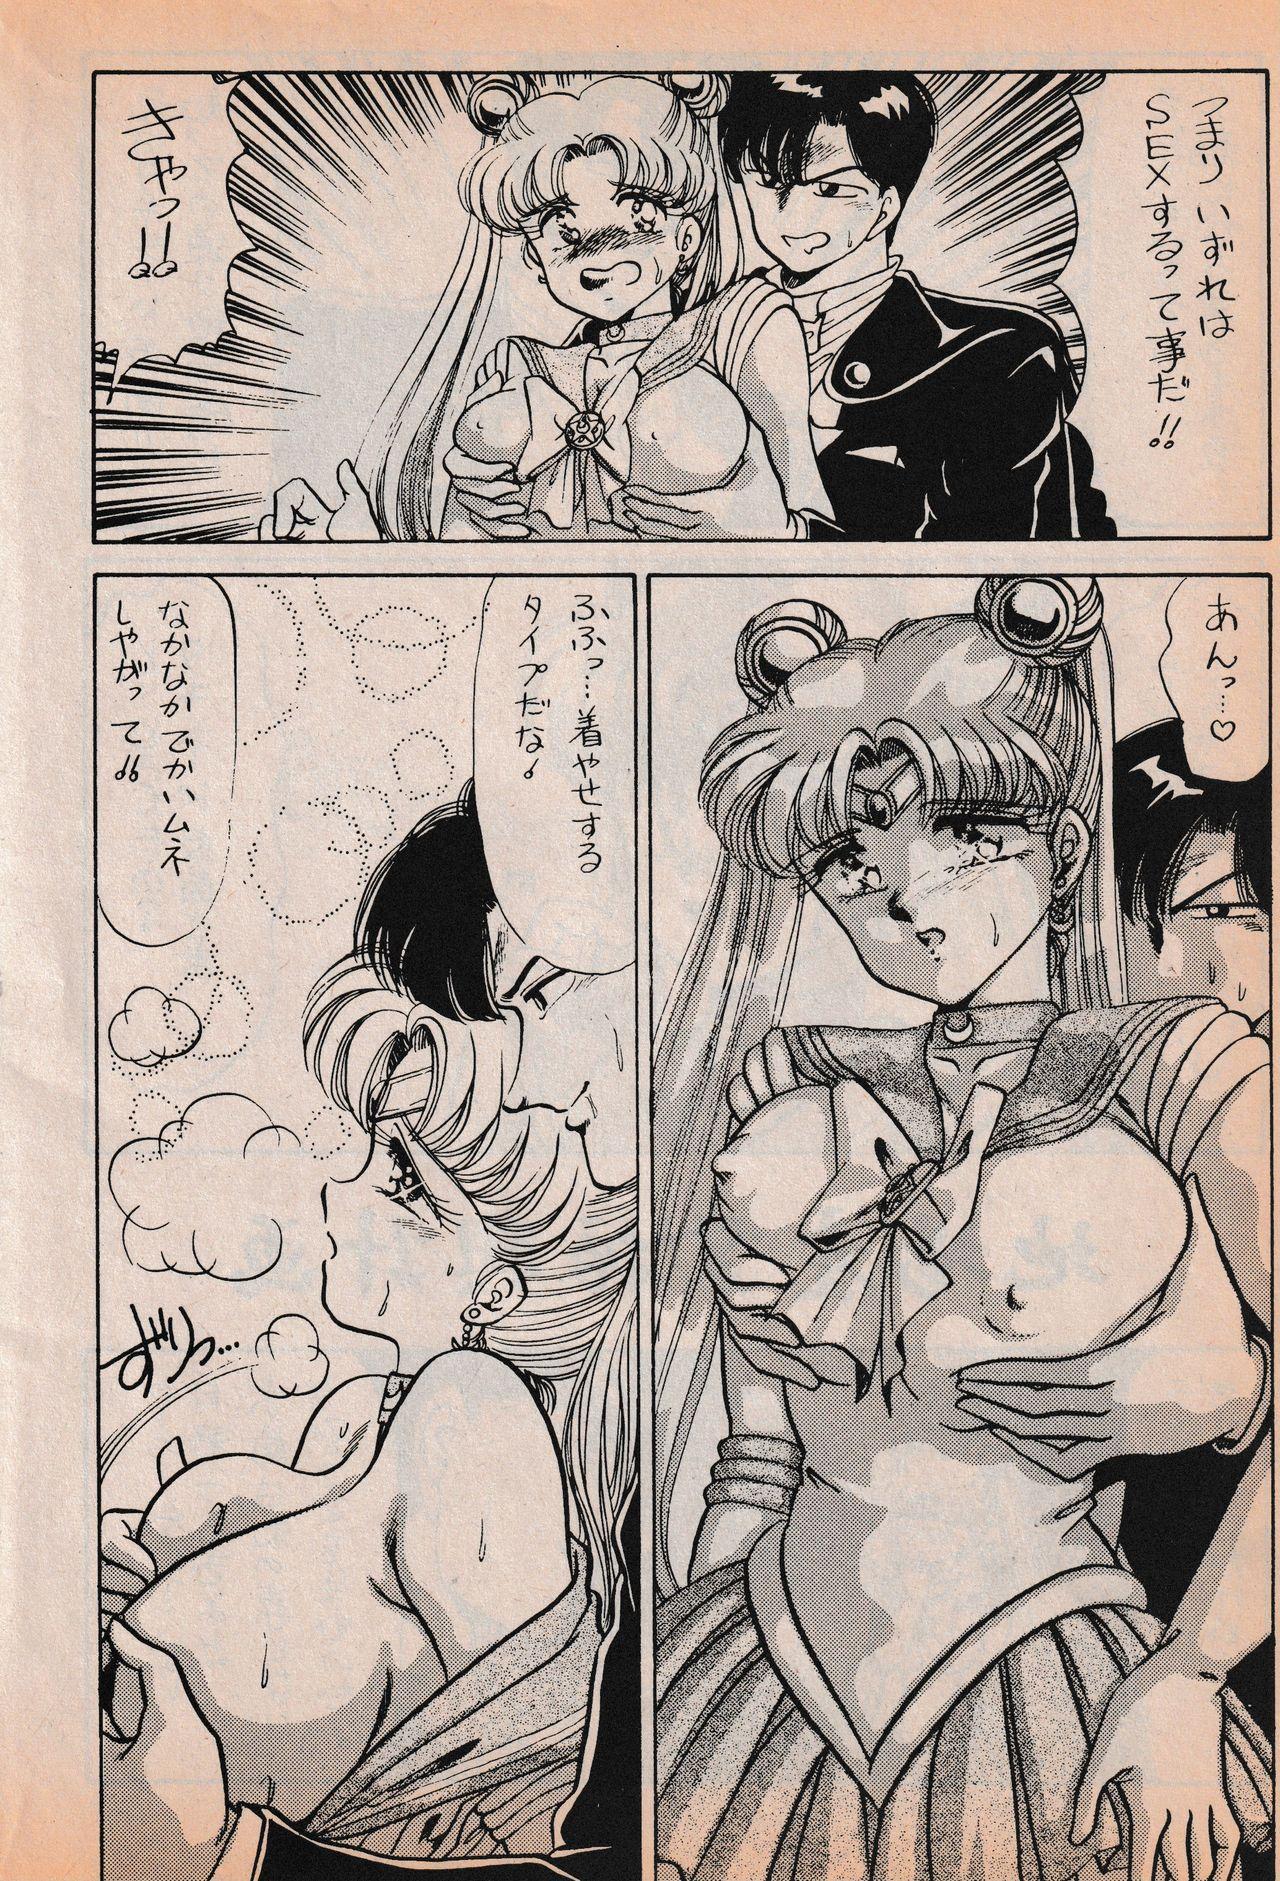 Fuck Com Sailor X vol. 7 - The Kama Sutra Of Pain - Sailor moon Tenchi muyo G gundam Blowjob - Page 3